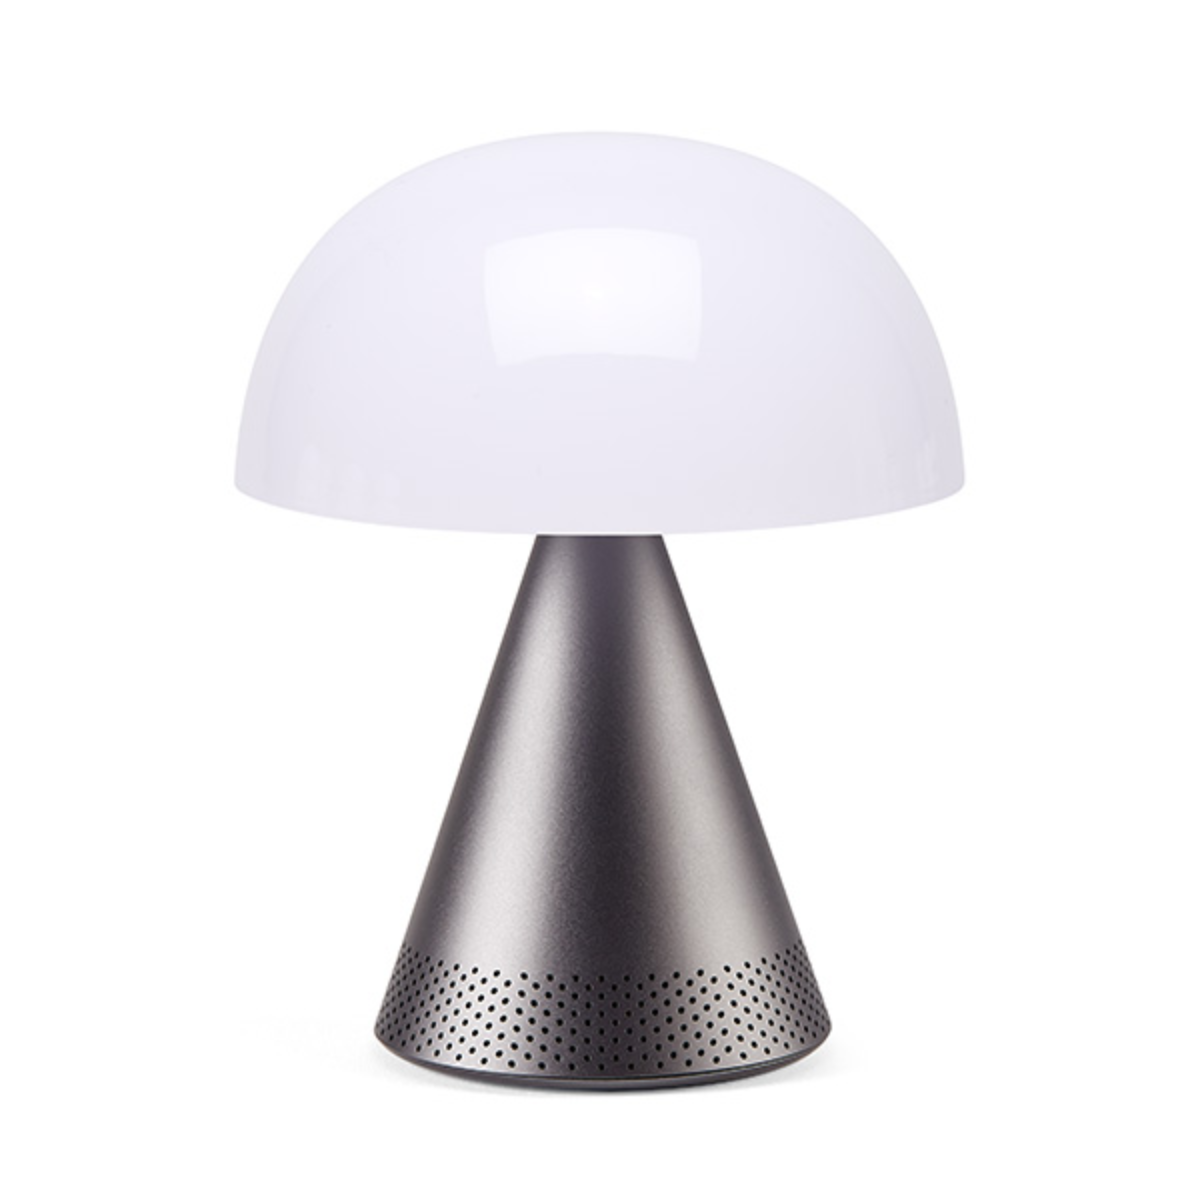 Lexon - MINA L (Audio) Rechargeable Portable LED Lamp with Bluetooth Speaker